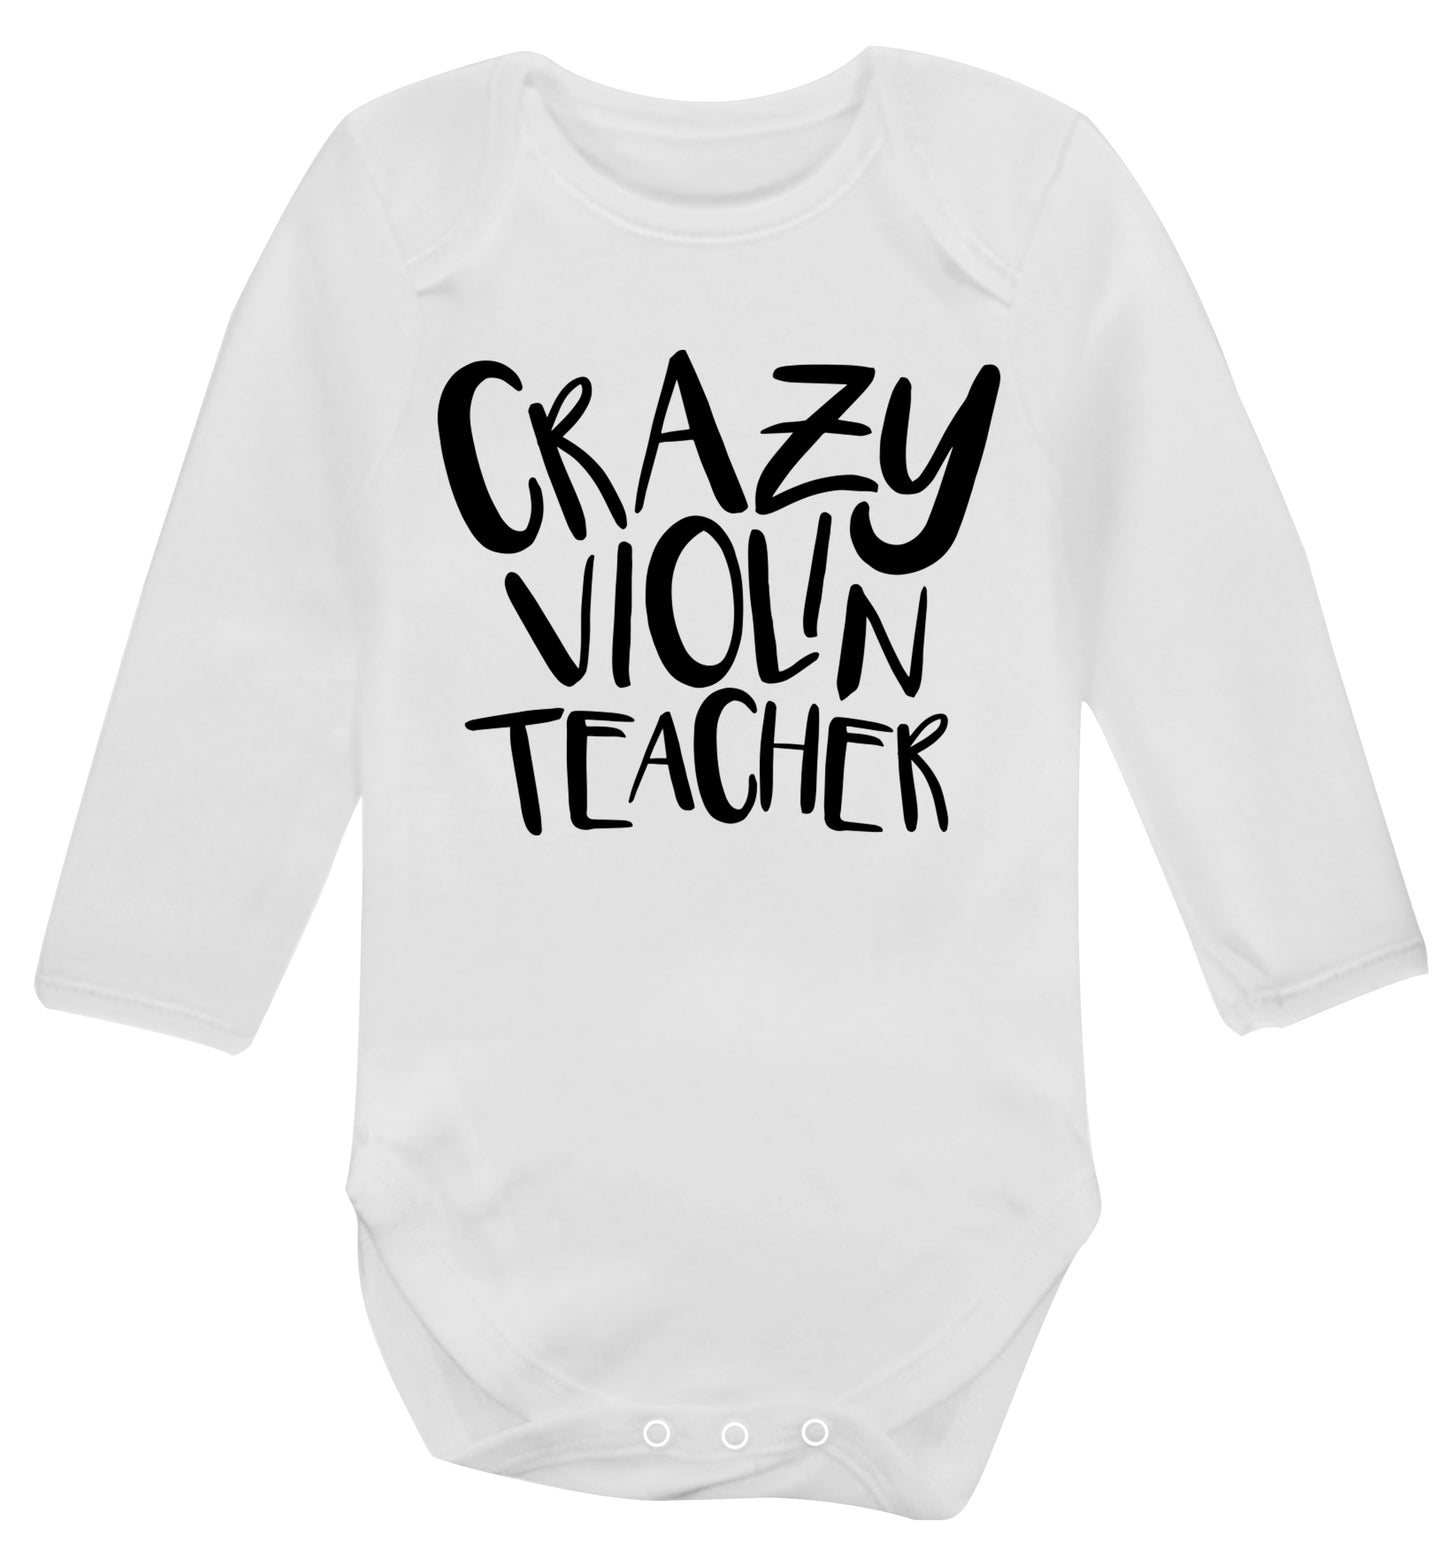 Crazy violin teacher Baby Vest long sleeved white 6-12 months